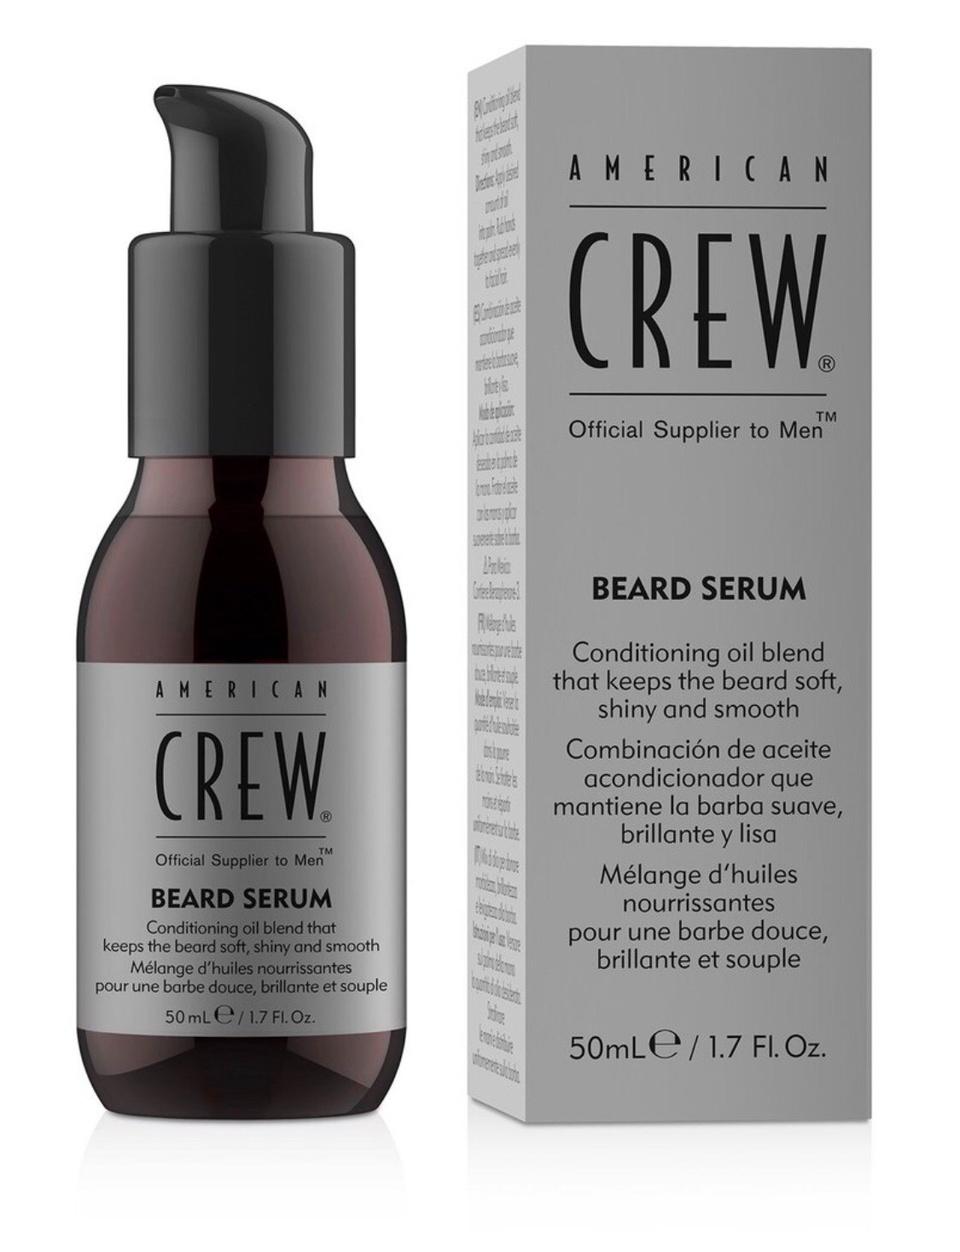 American Crew Beard Serum - Сыворотка для бороды 50 мл - 1 000 ₽, заказать онлайн.